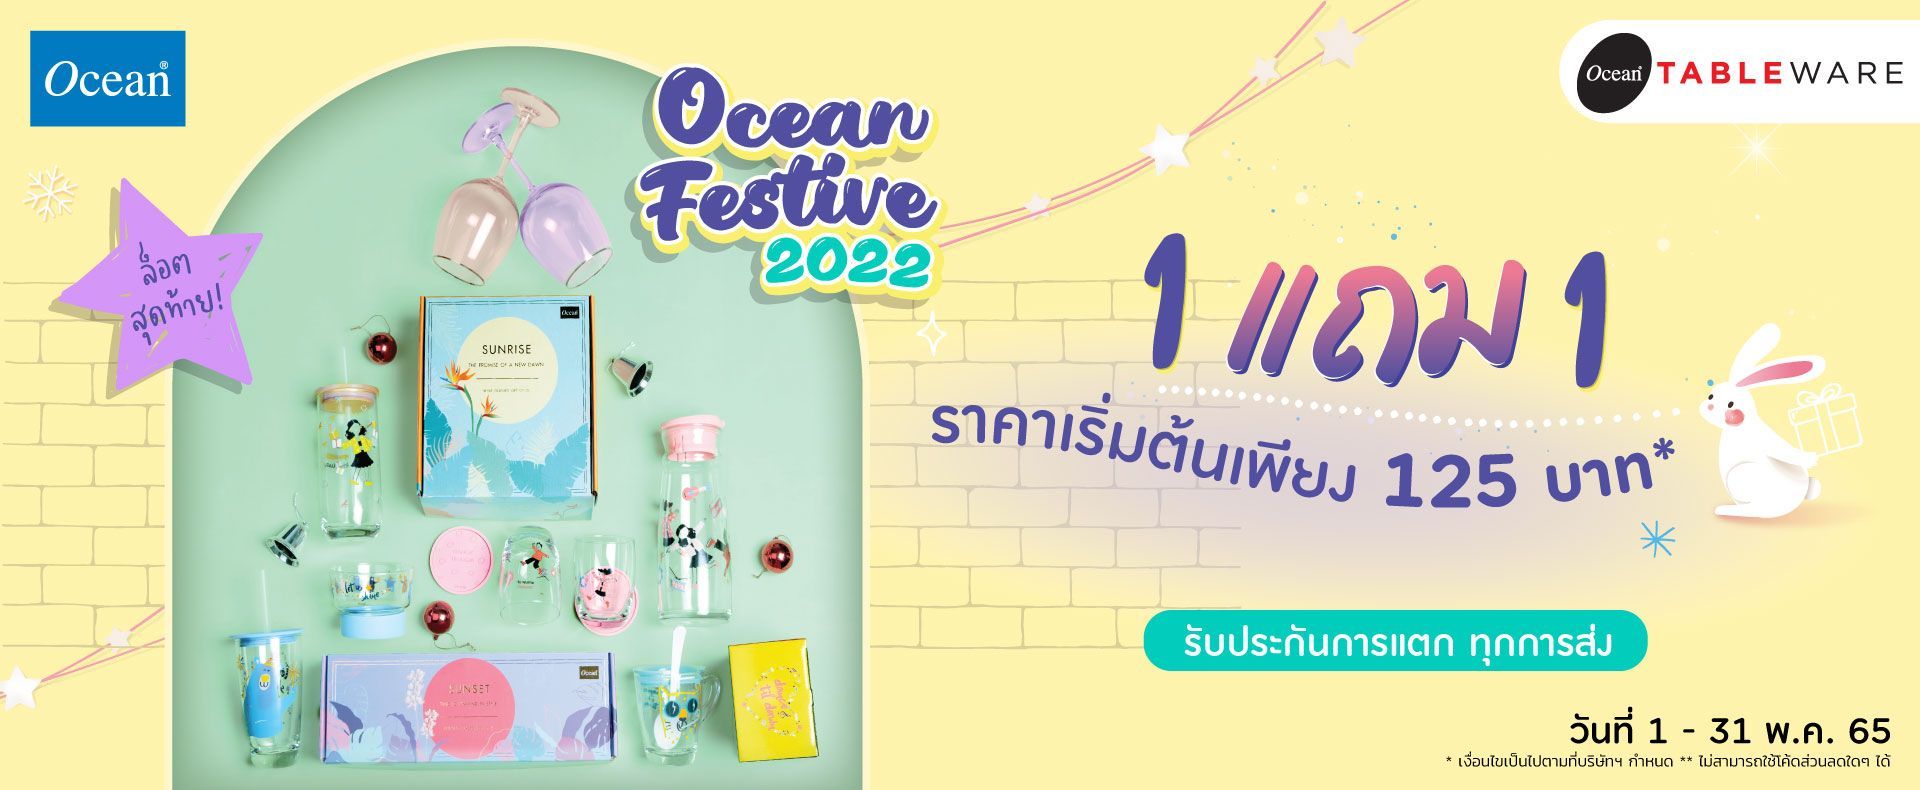 Ocean Festive 2022